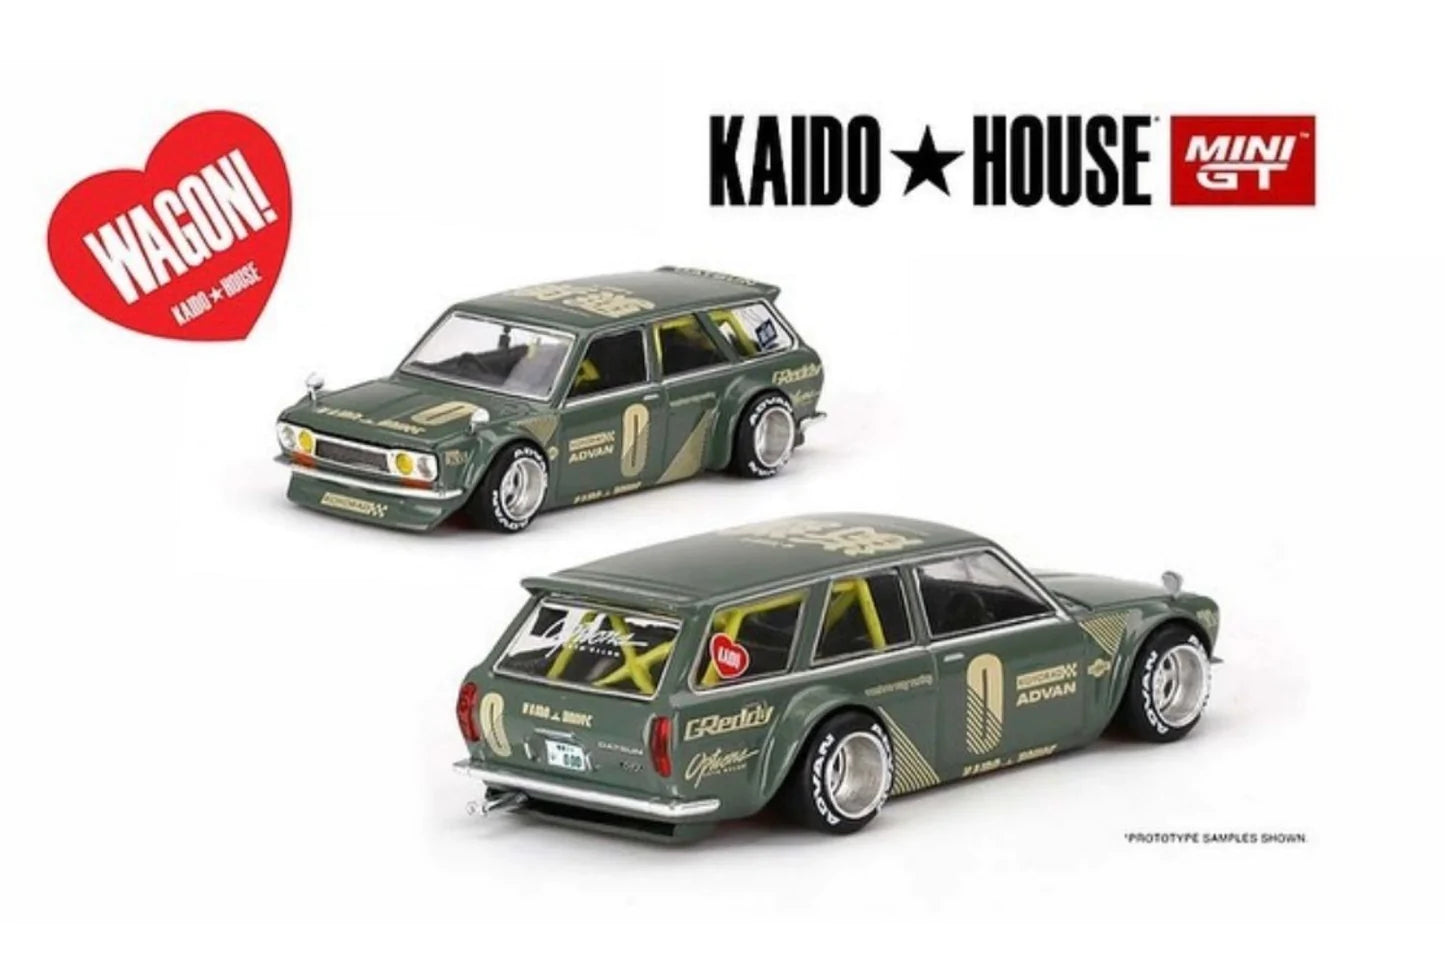 Kaido House x Mini GT 1:64 Datsun Kaido 510 Wagon Limited Edition Green